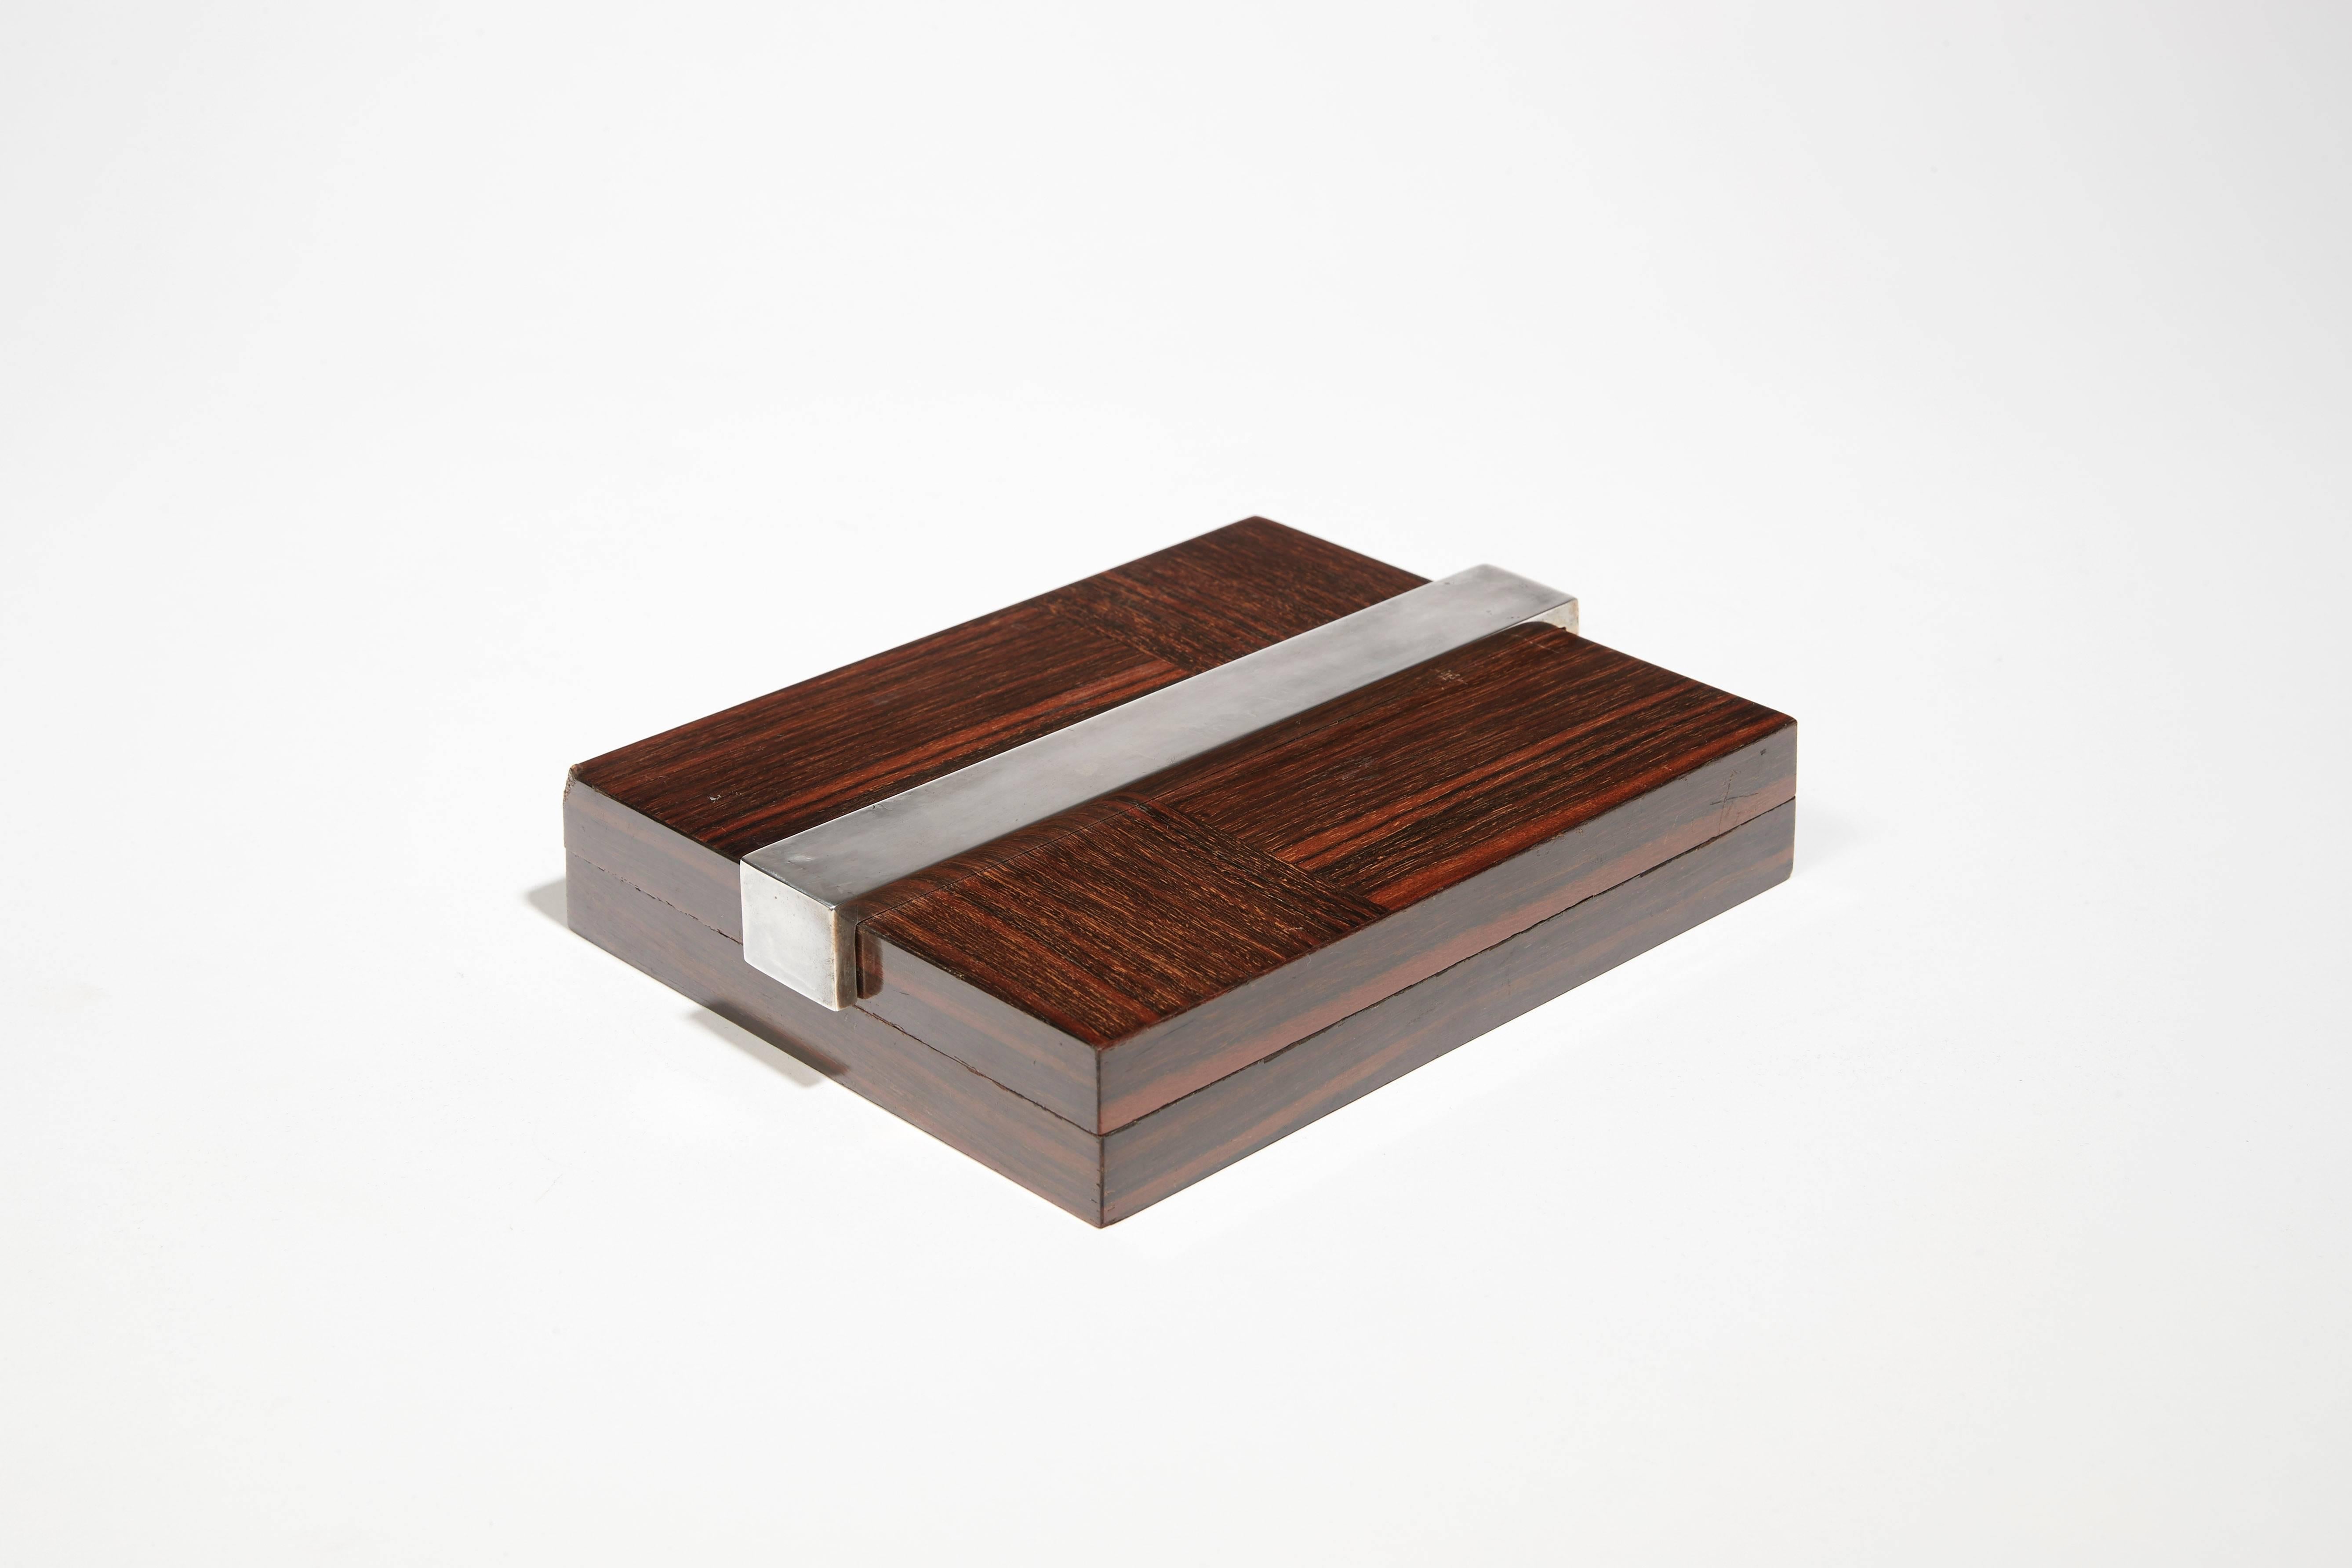 Box in wood veneer and silver nickel-plated metal. Stamped with 